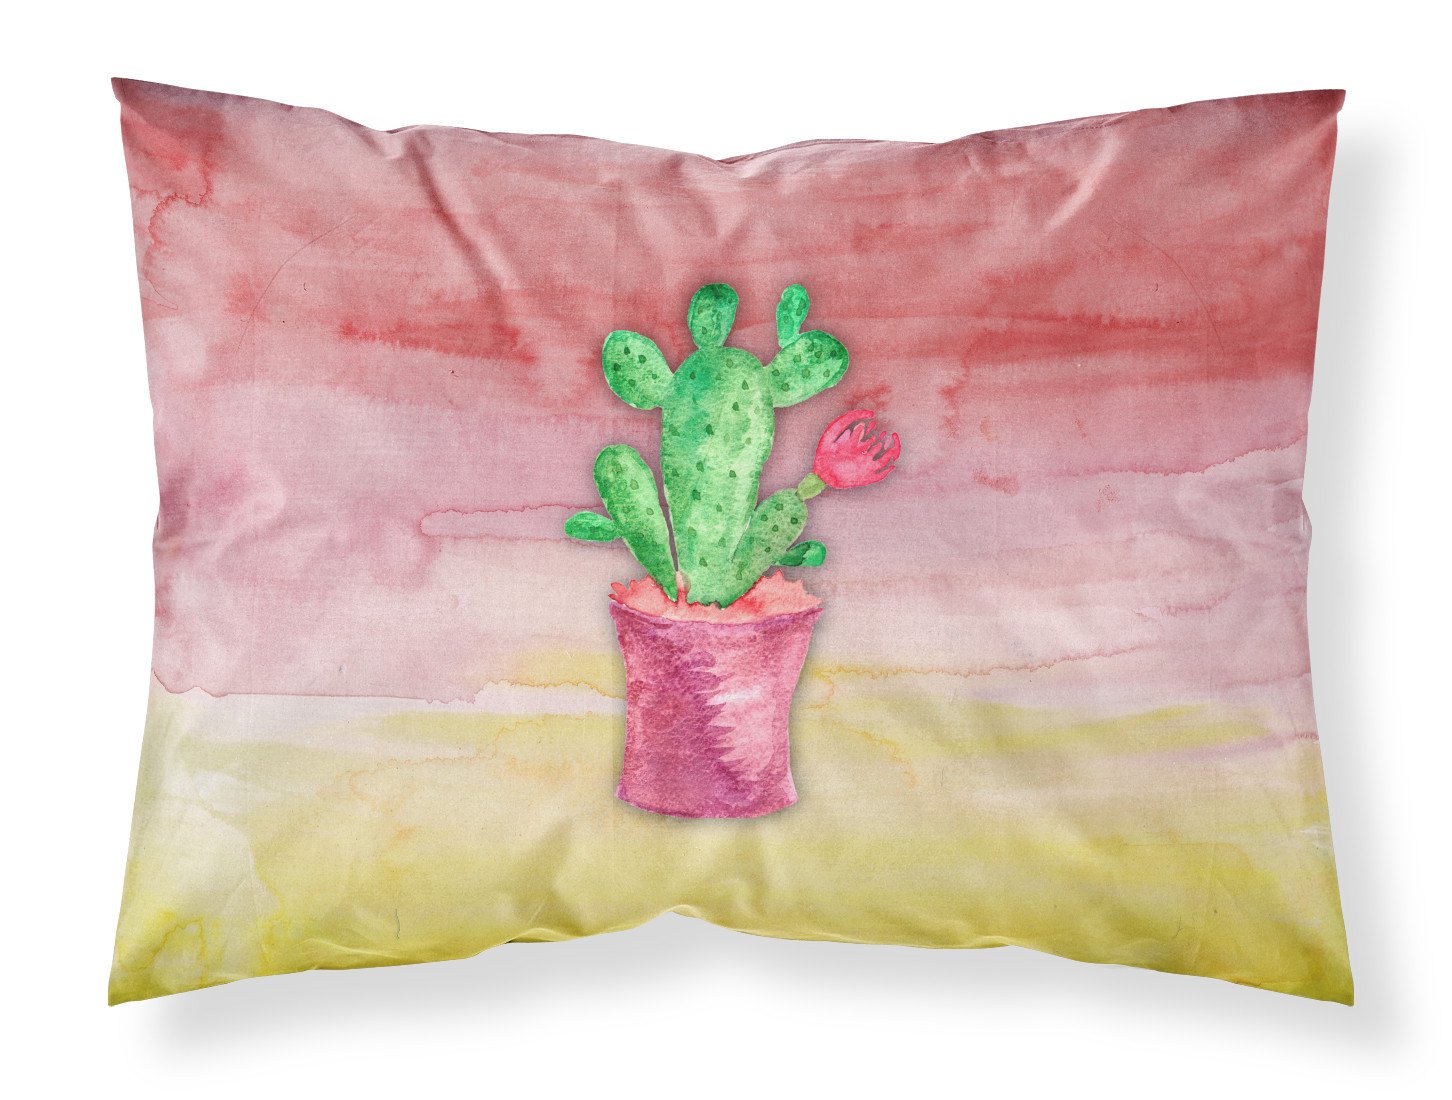 Flowering Cactus Watercolor Fabric Standard Pillowcase BB7361PILLOWCASE by Caroline's Treasures